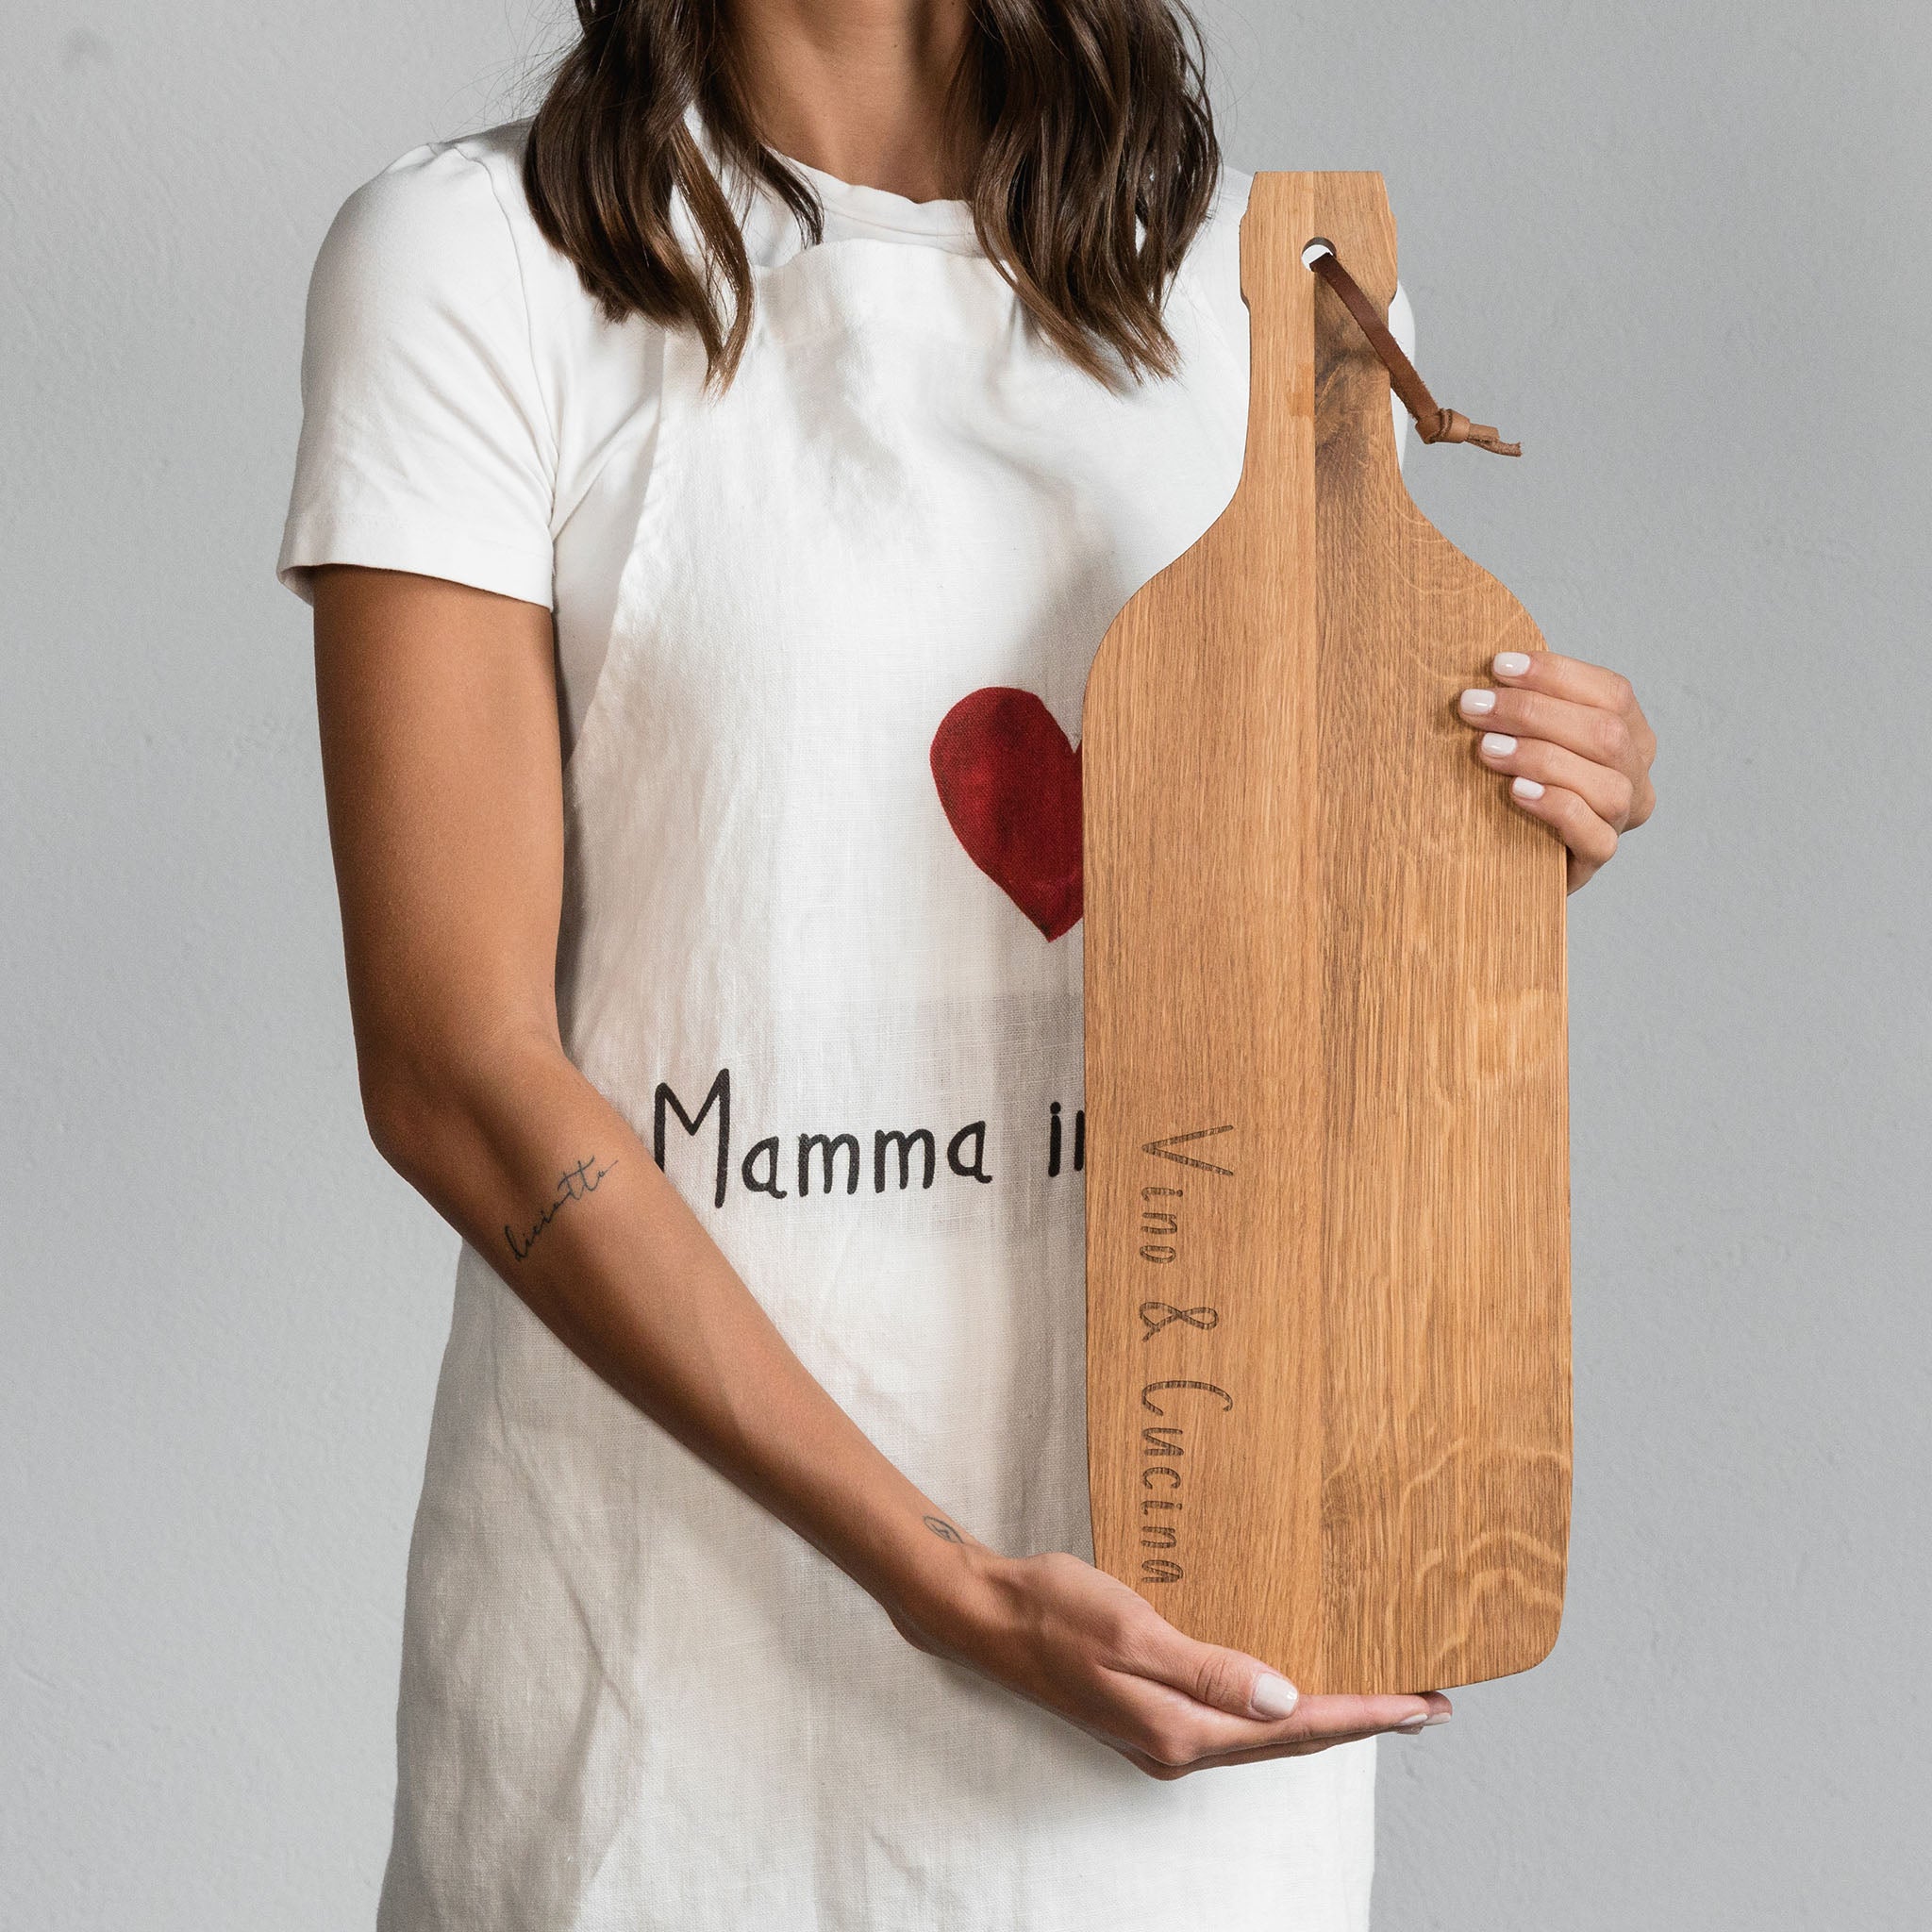 Vino e Cucina bottle-shaped cutting board